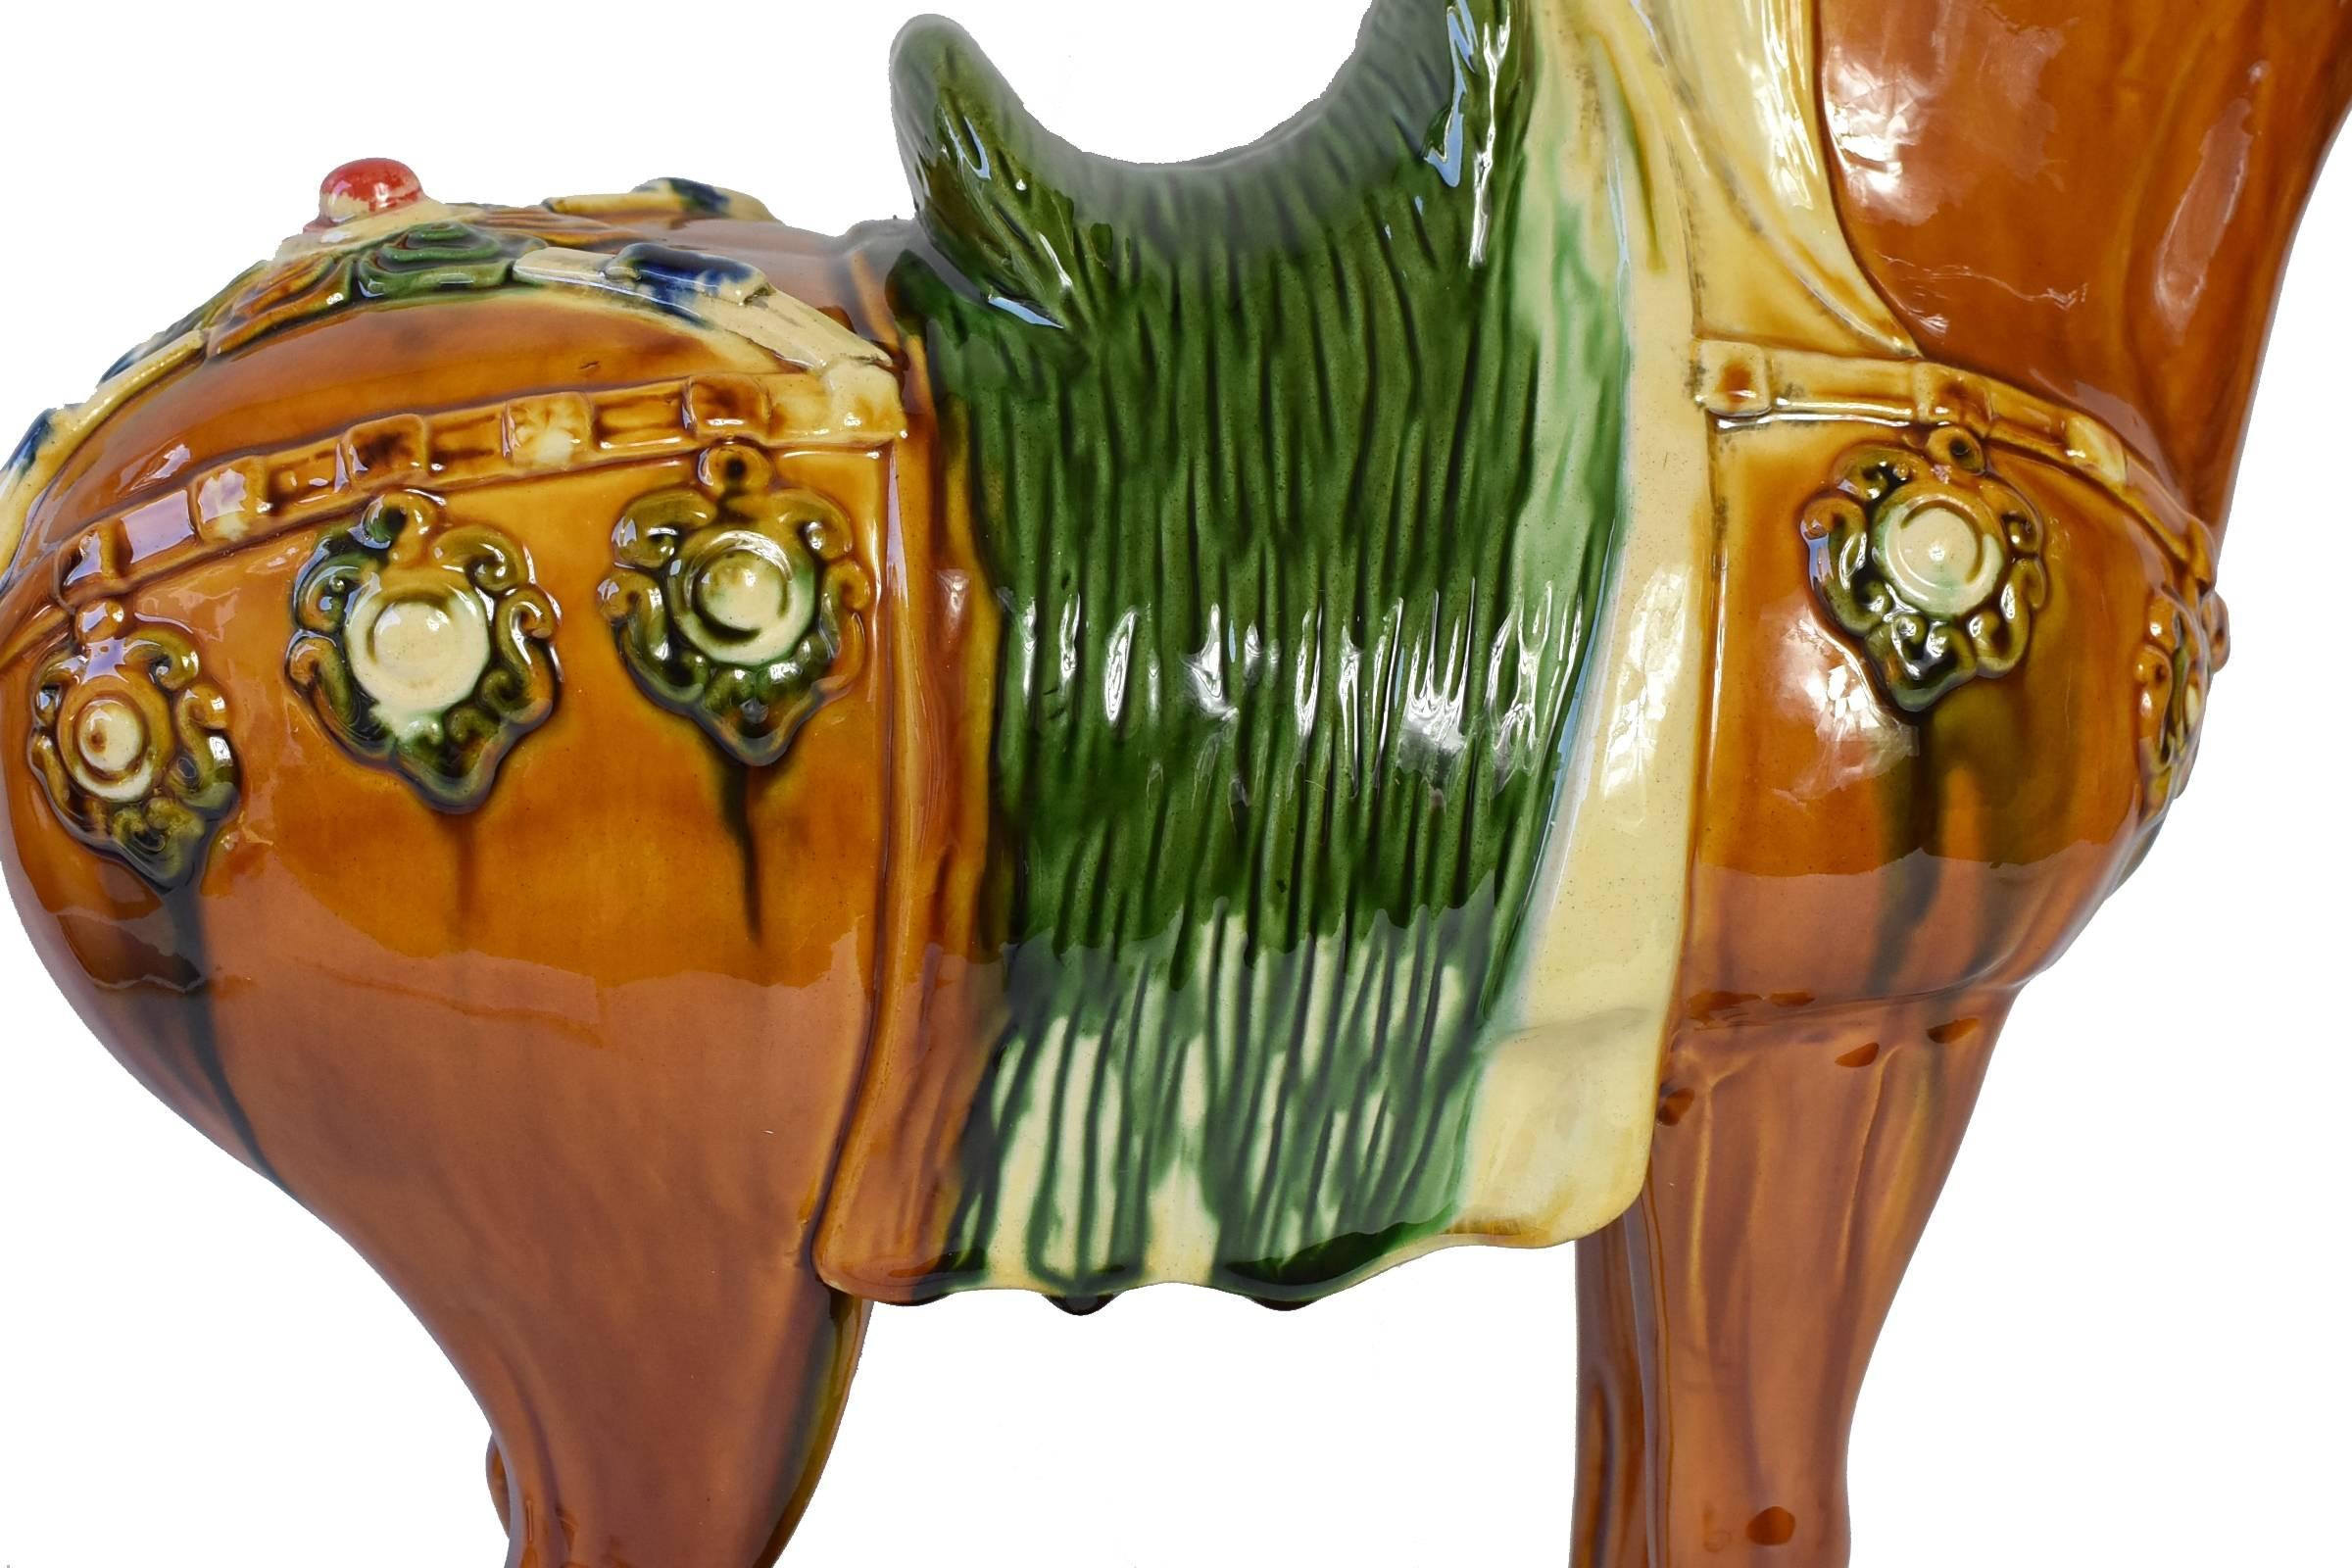 Glazed Caramel Brown Pottery Horse, Chinese San Cai Glaze